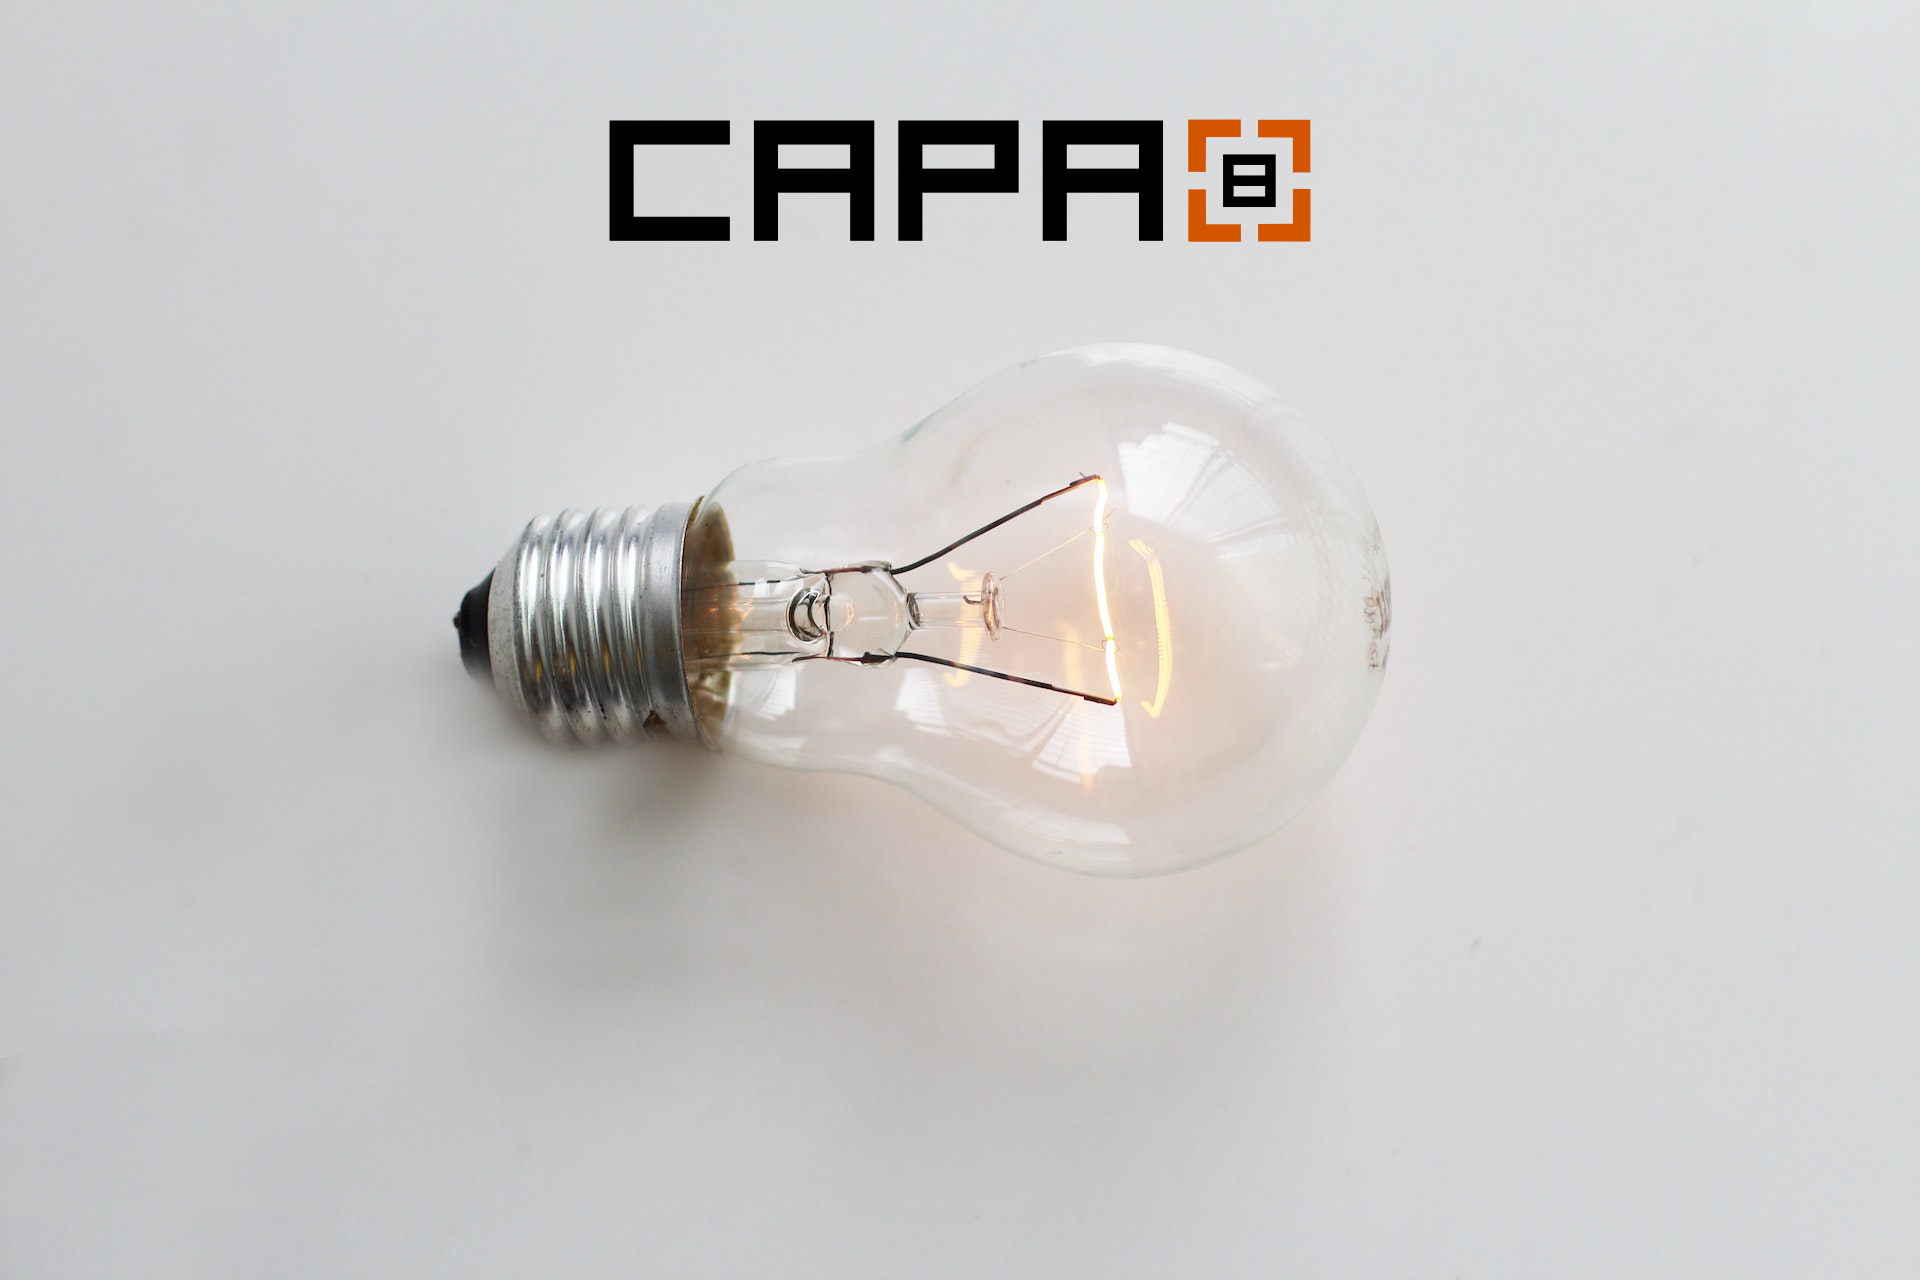 (c) Capa8.net